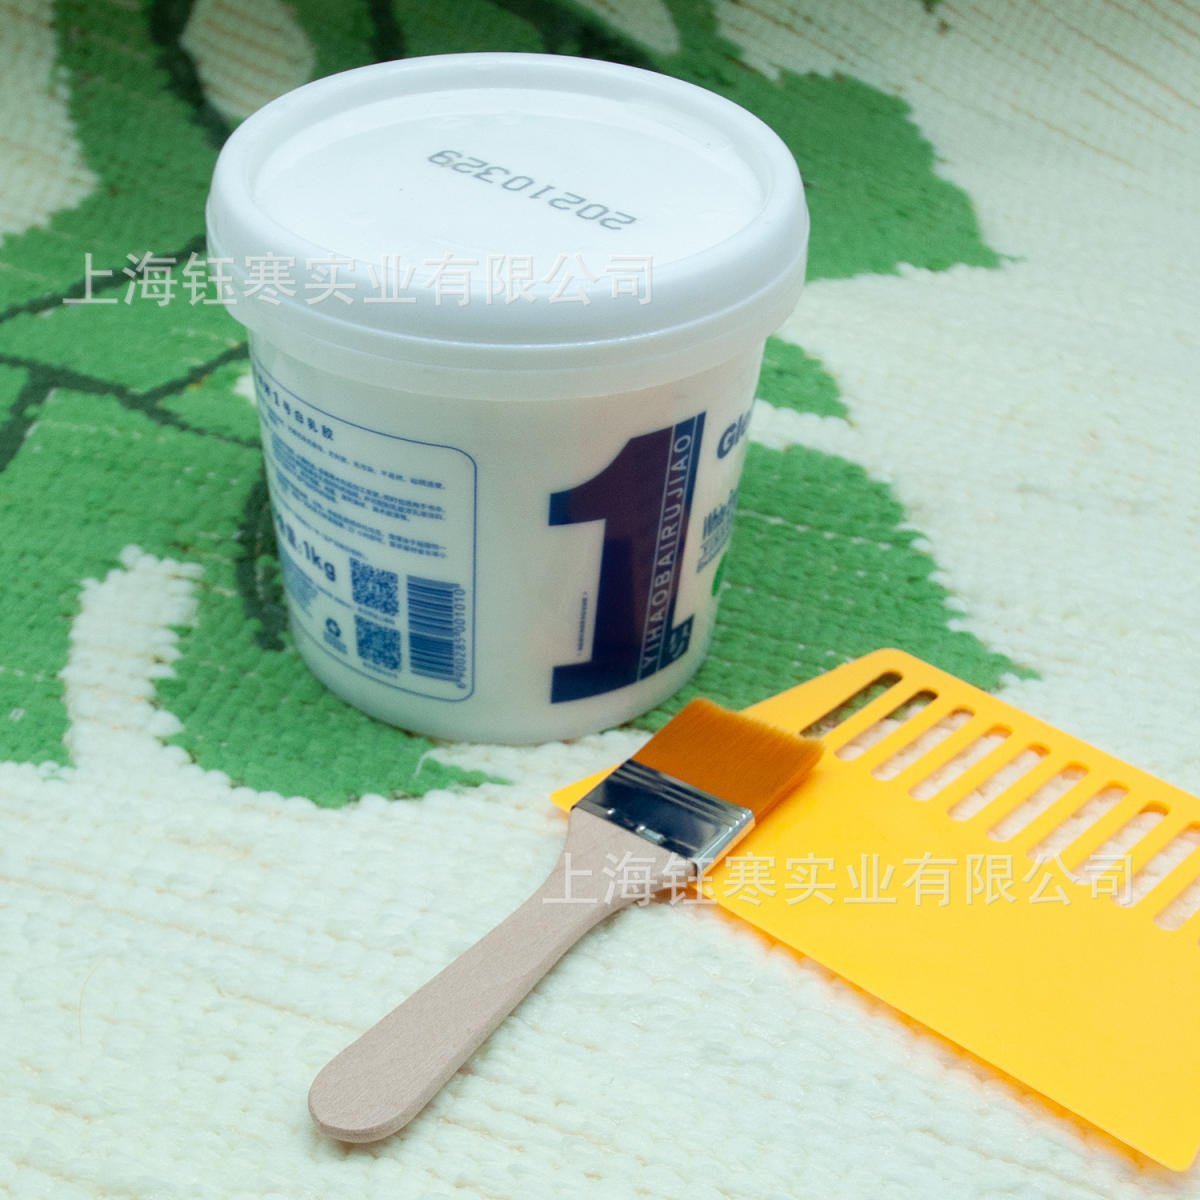 Tufting machine glue white glue woodworking white glue gun weaving carpet  tufting grab suitable glue to send brush scraper